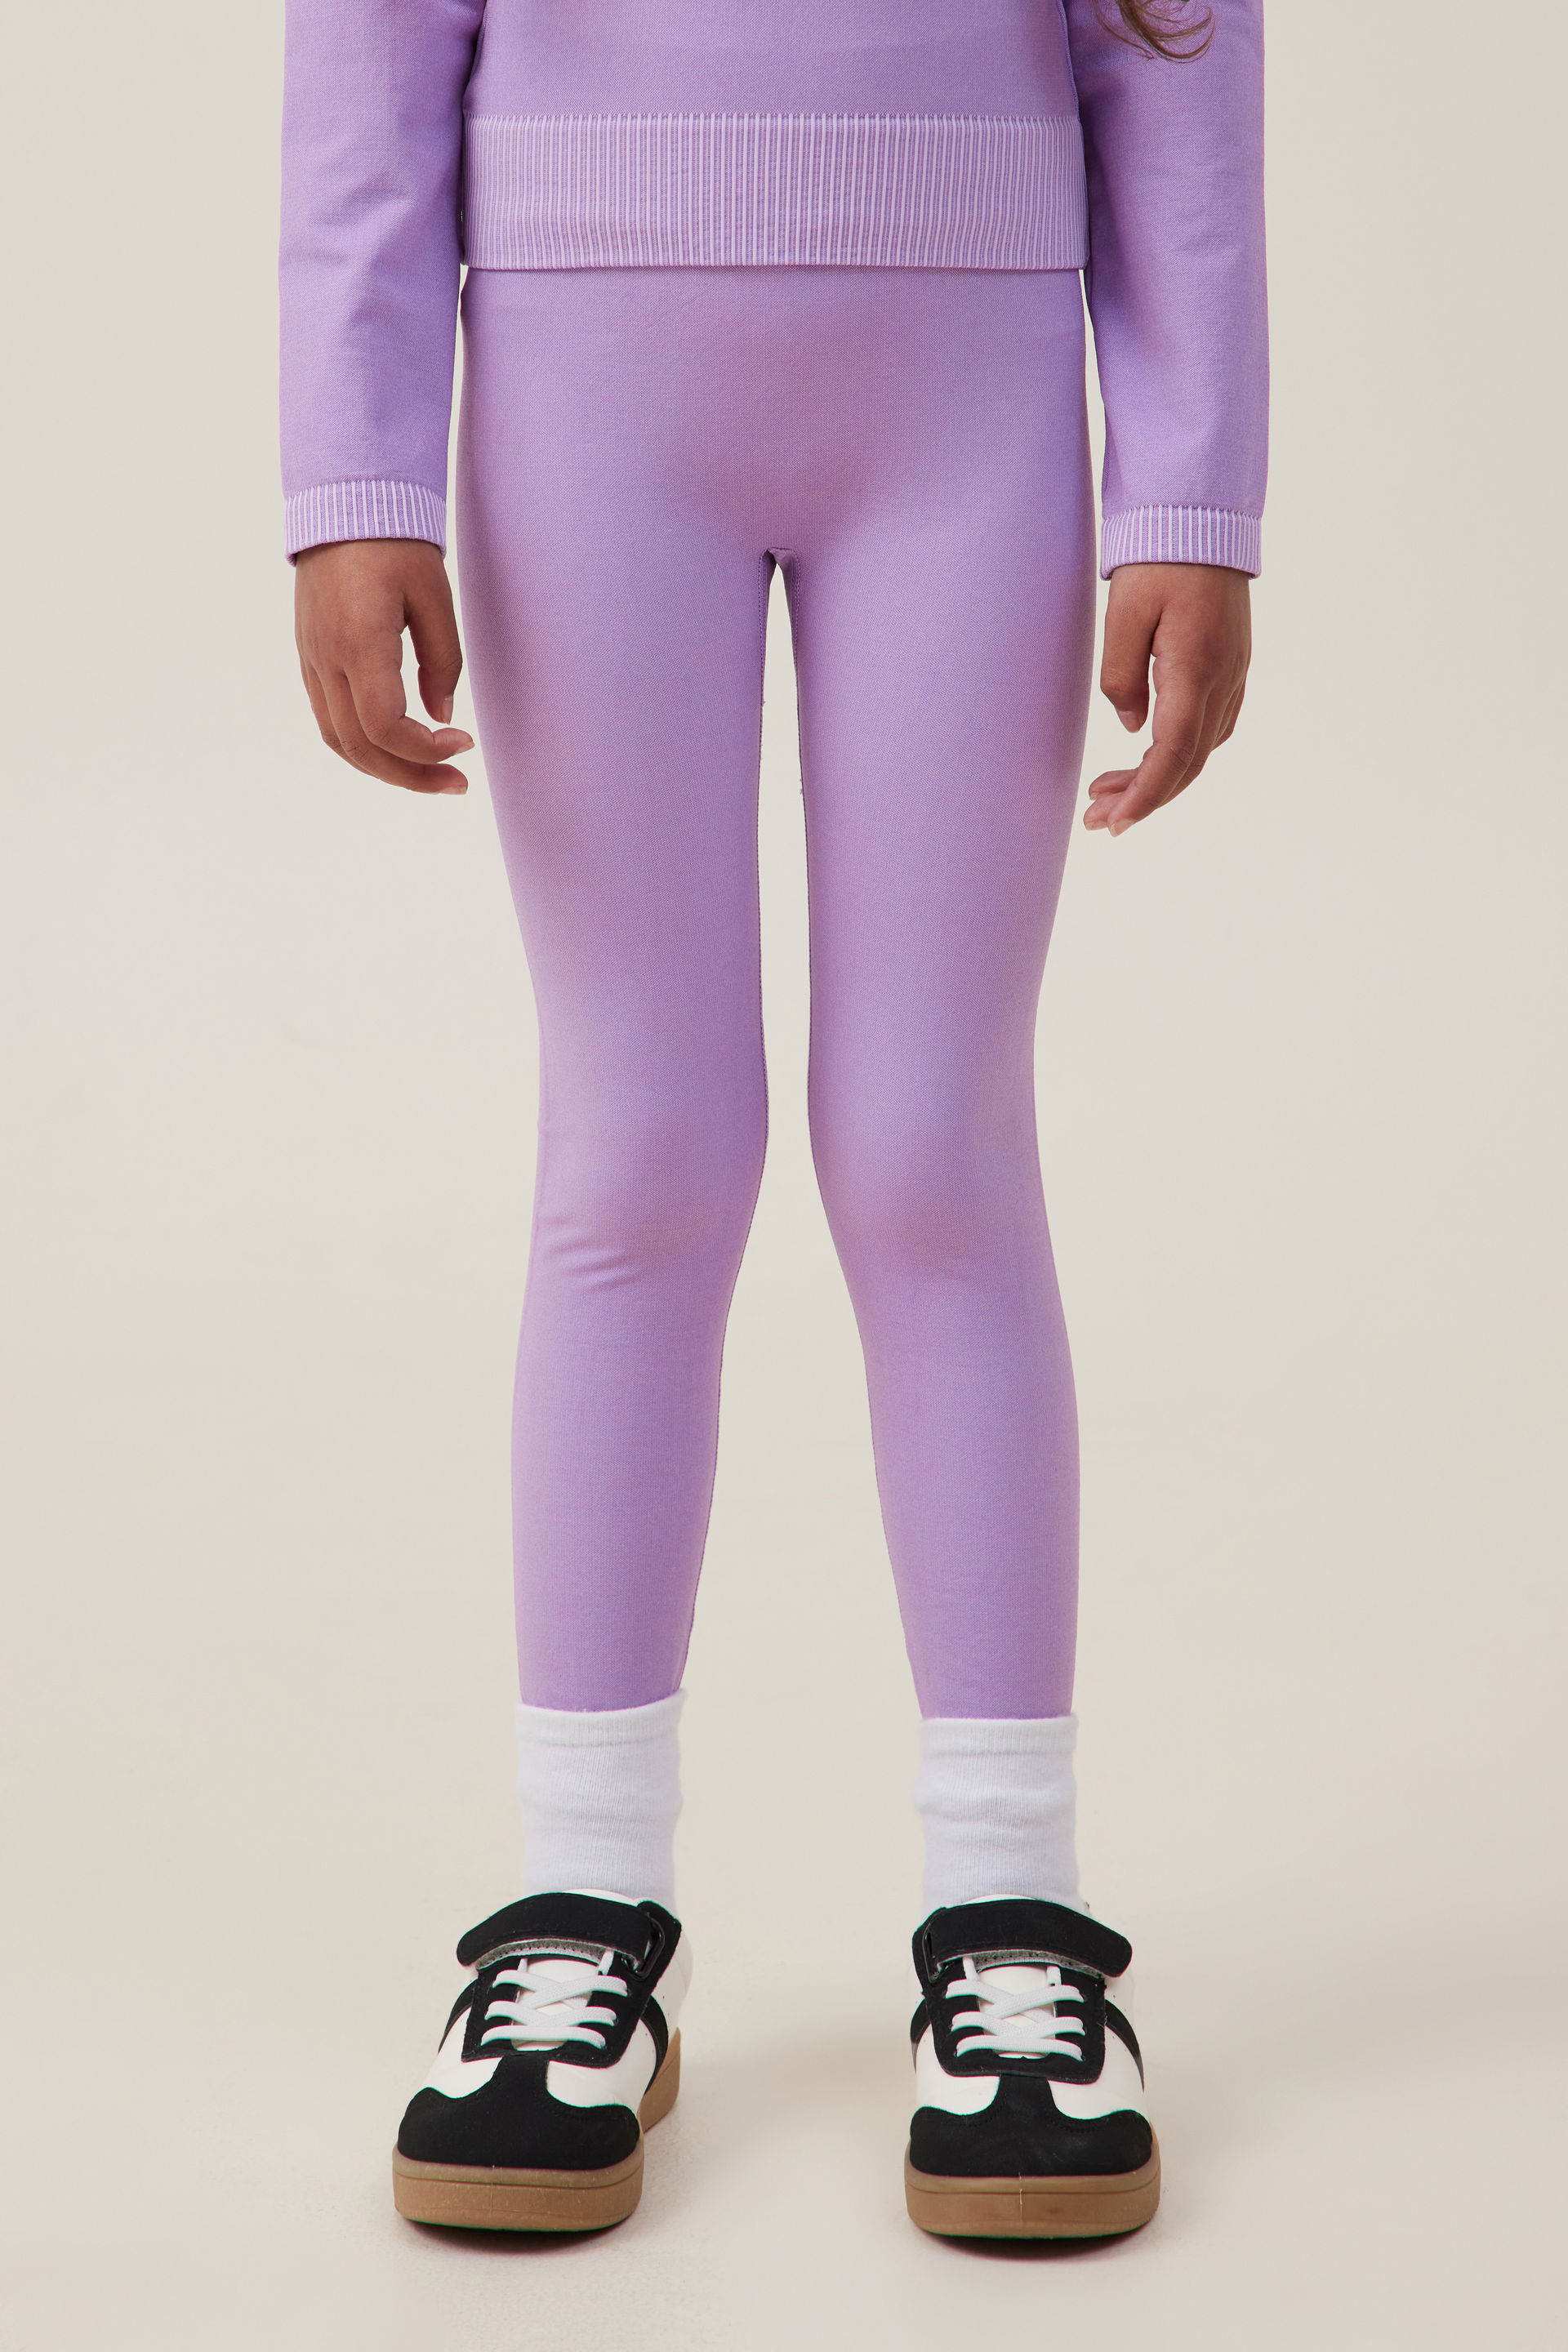 Soft Surroundings Superslim Indigo Kilim Leggings XL Pull On Pants Blue  Pink